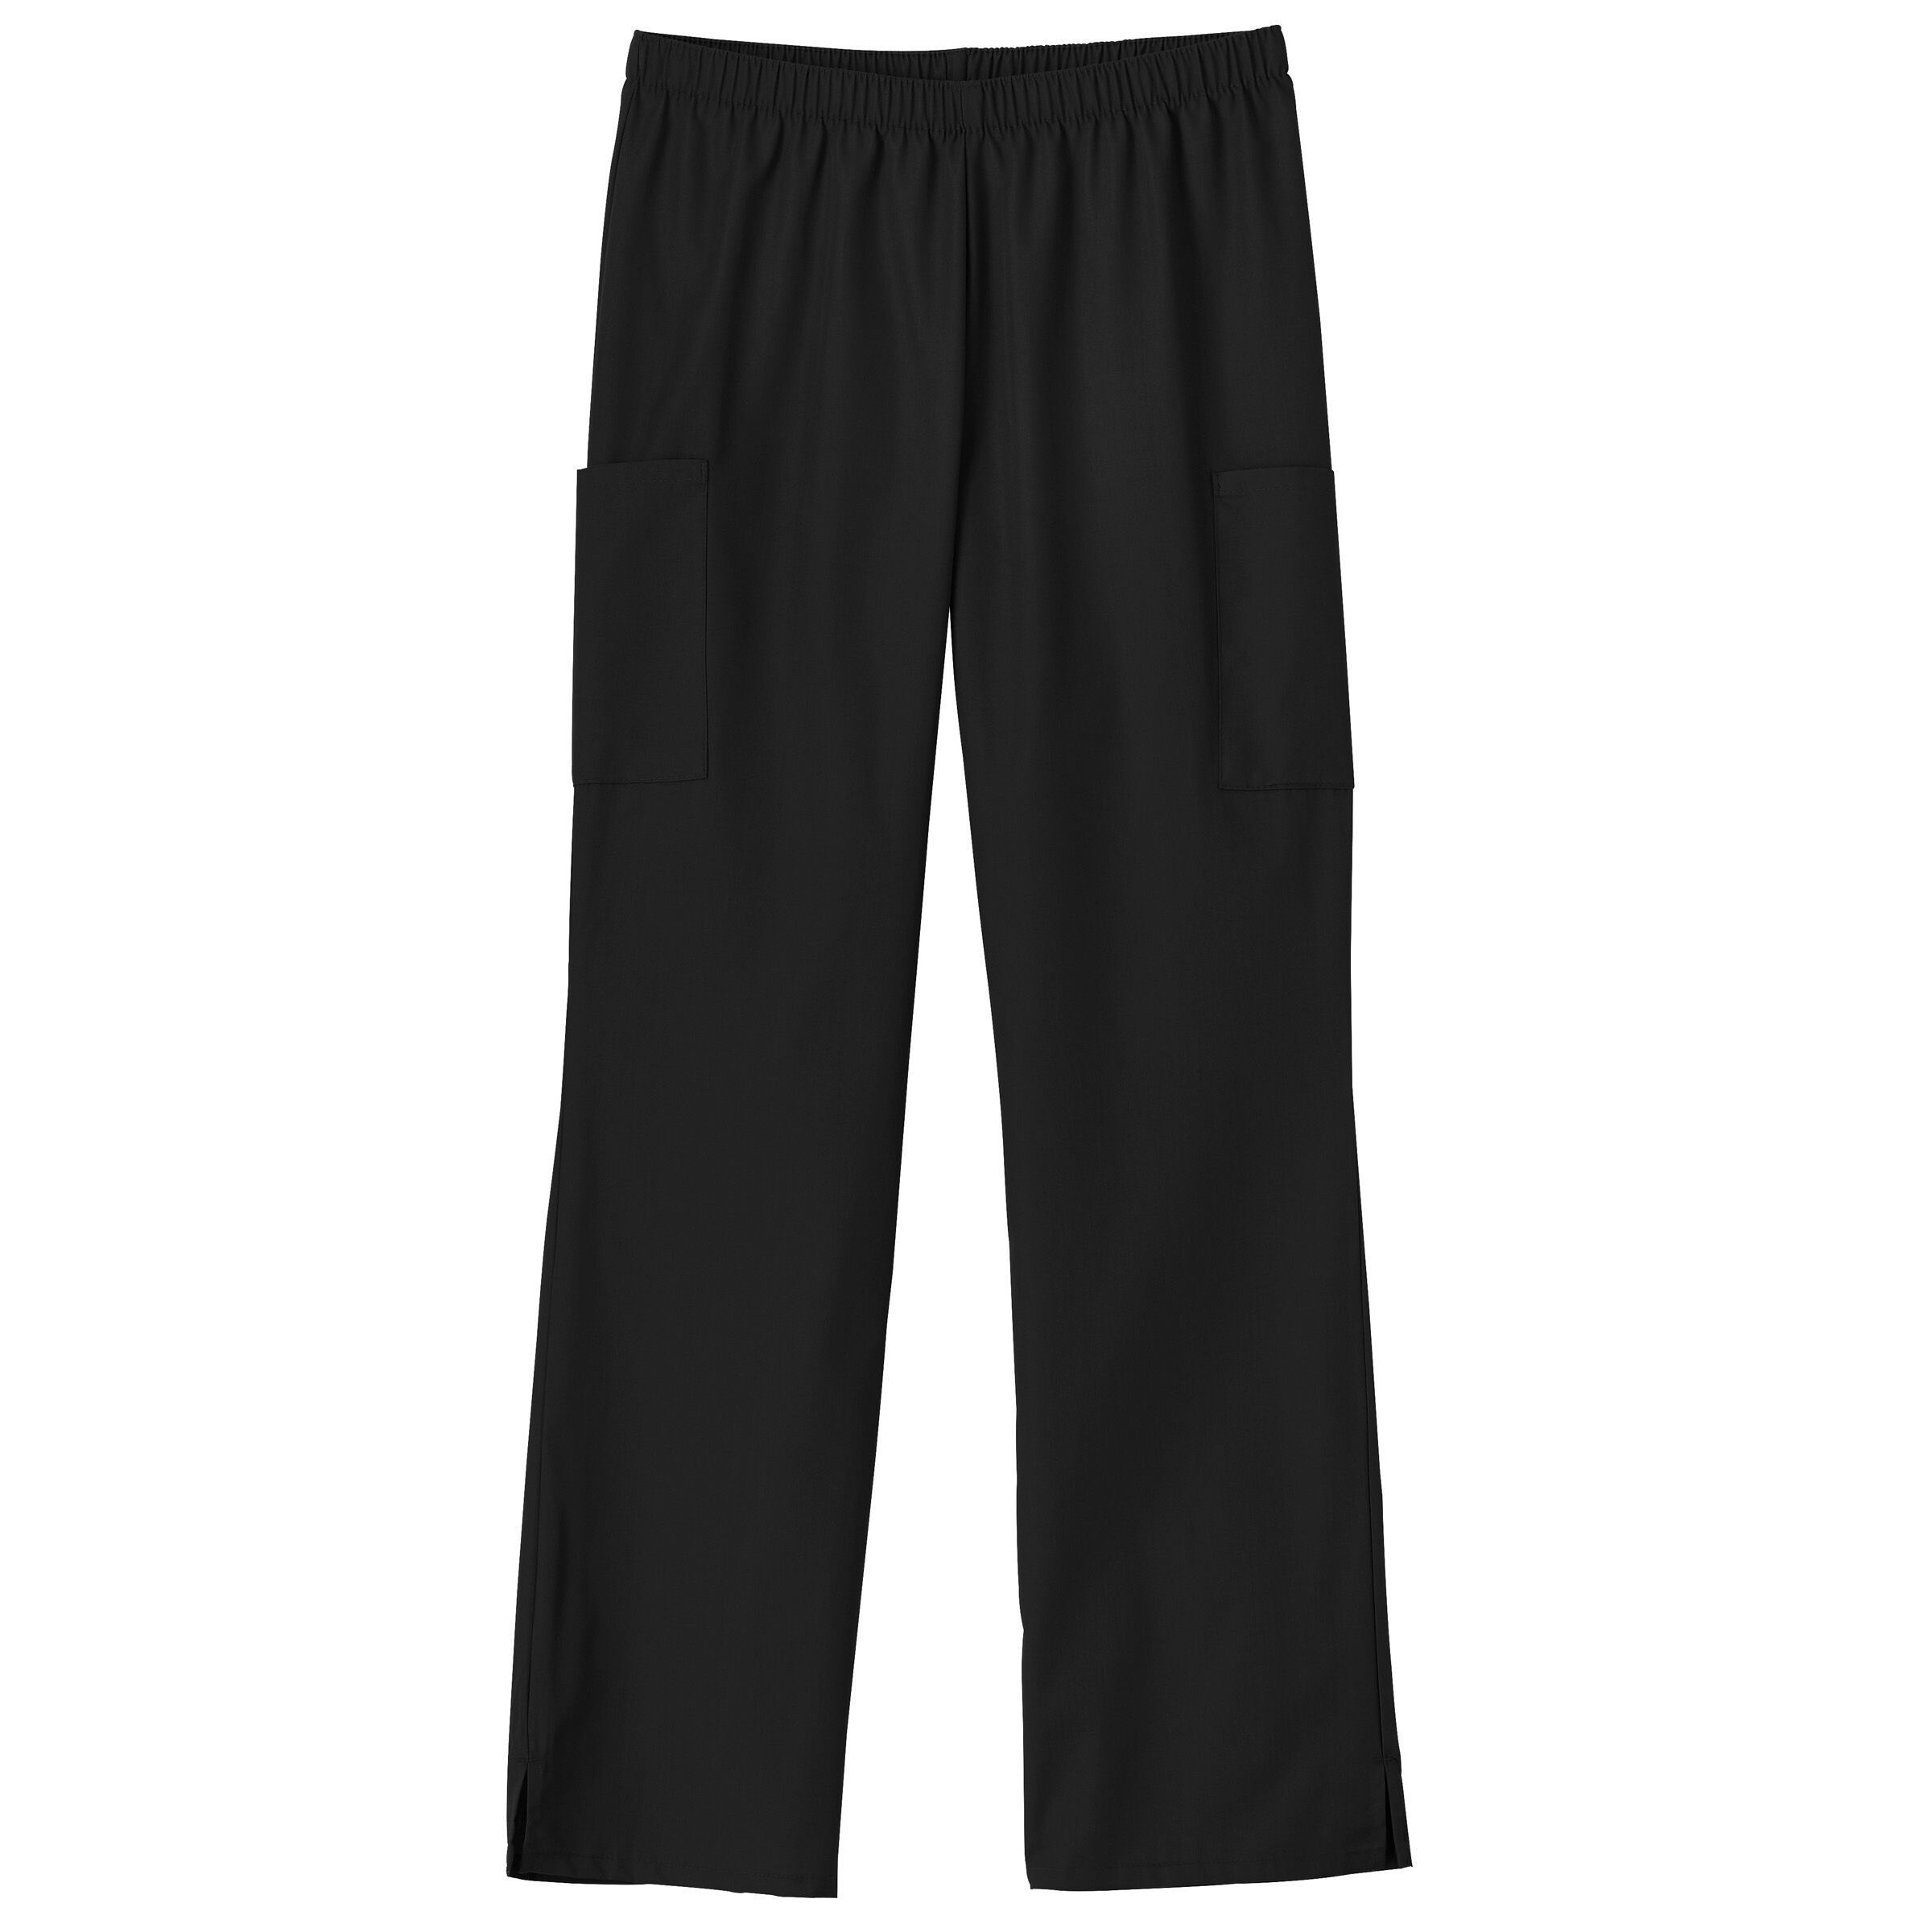 Fundamentals Ladies Cargo Pant Petite Full Elastic, Black, large image number 1